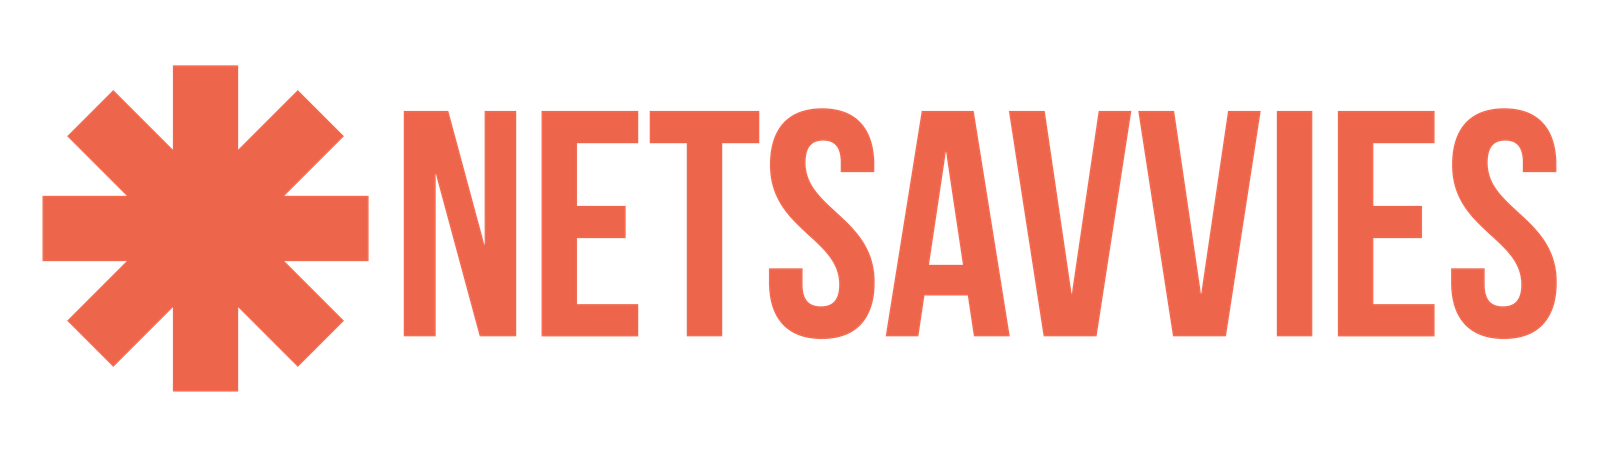 Netsavvies - Digital Marketing Agency in Ahmedabad